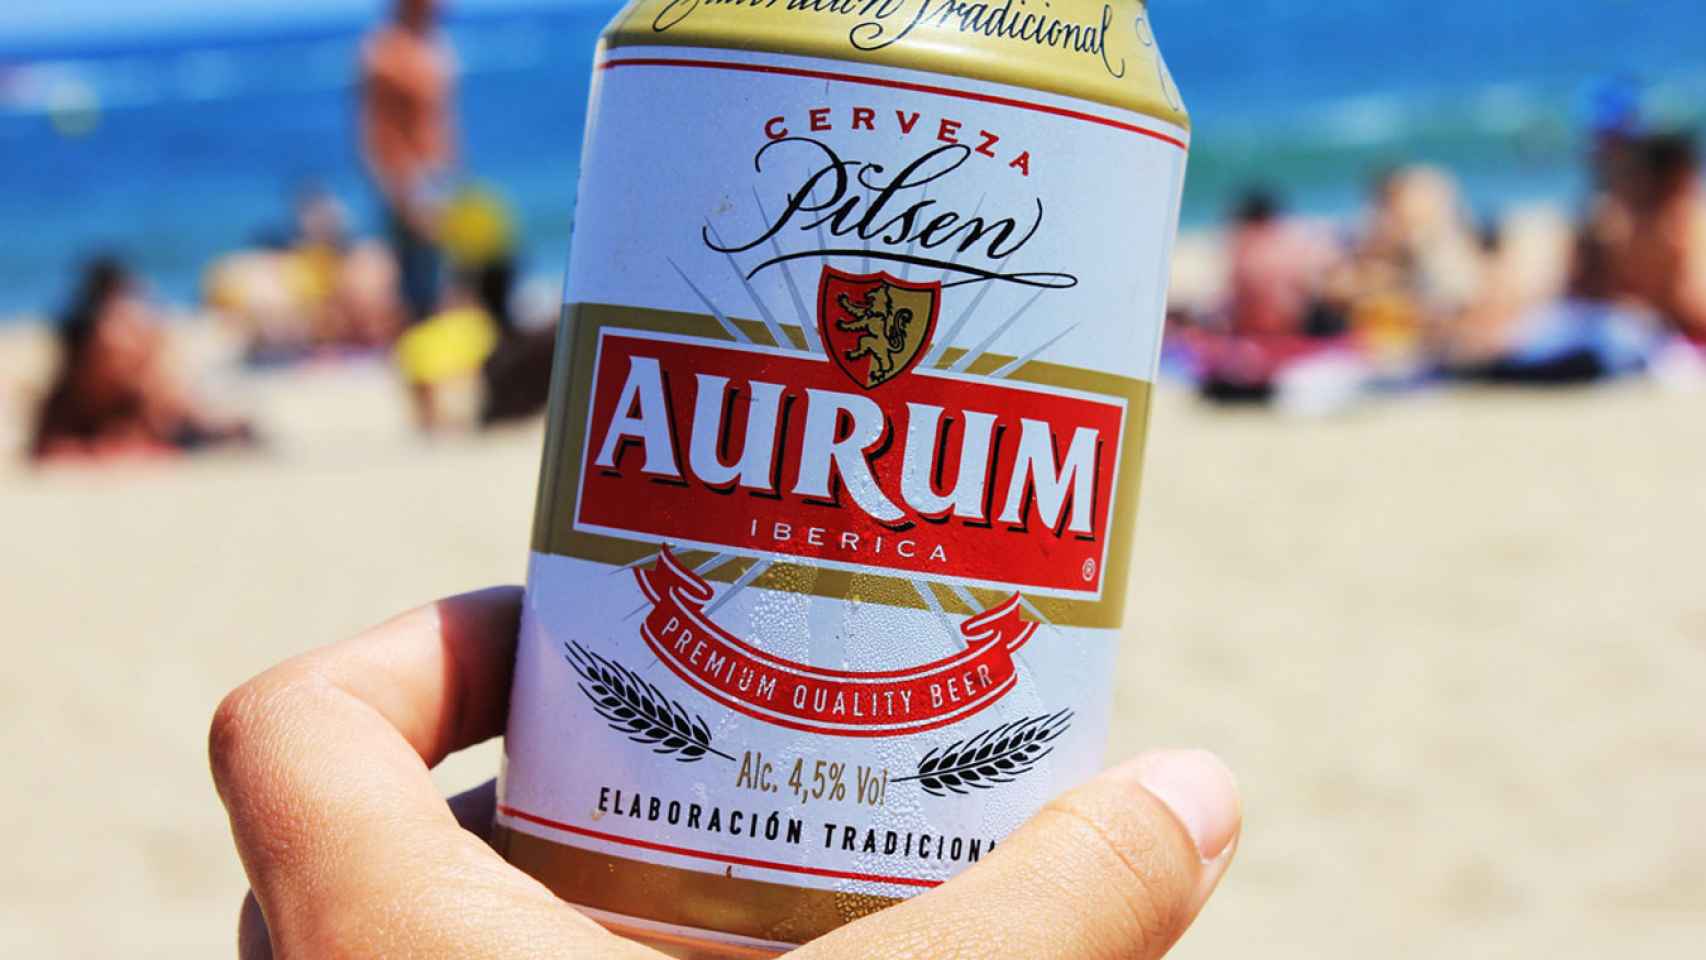 La cerveza Aurum, la mejor según la OCU.